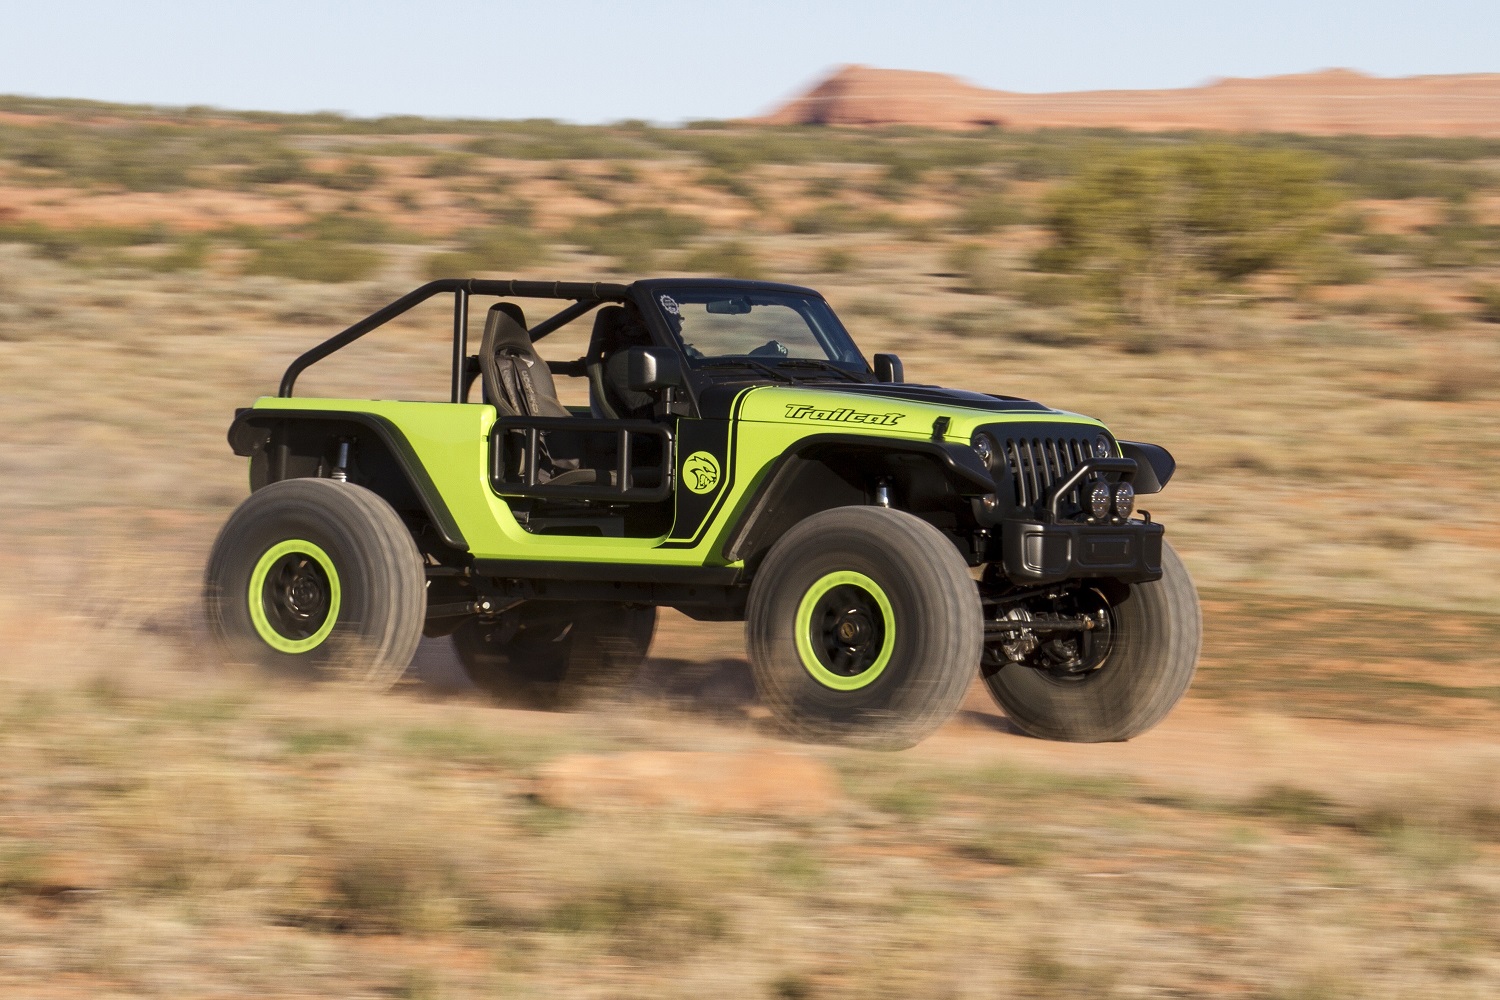 Jeep® Trailcat Concept